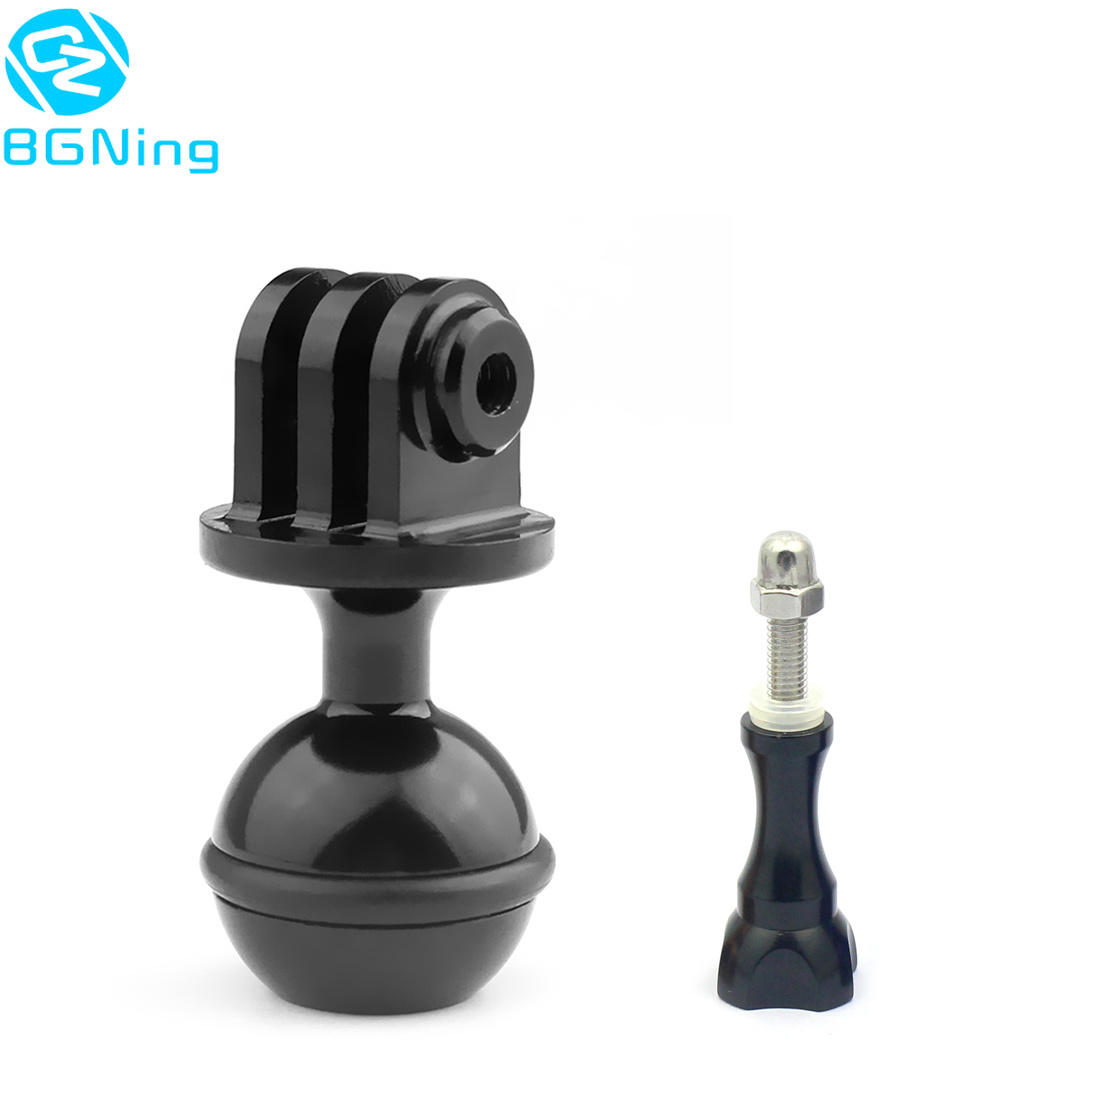 BGNing CNC 360 Degree Rotation Ball Head Base Mount Tripod 2.5cm w Screw for Hero 5 4 3+ 3 Session for XiaoYi SJCam GitUp Action Camera